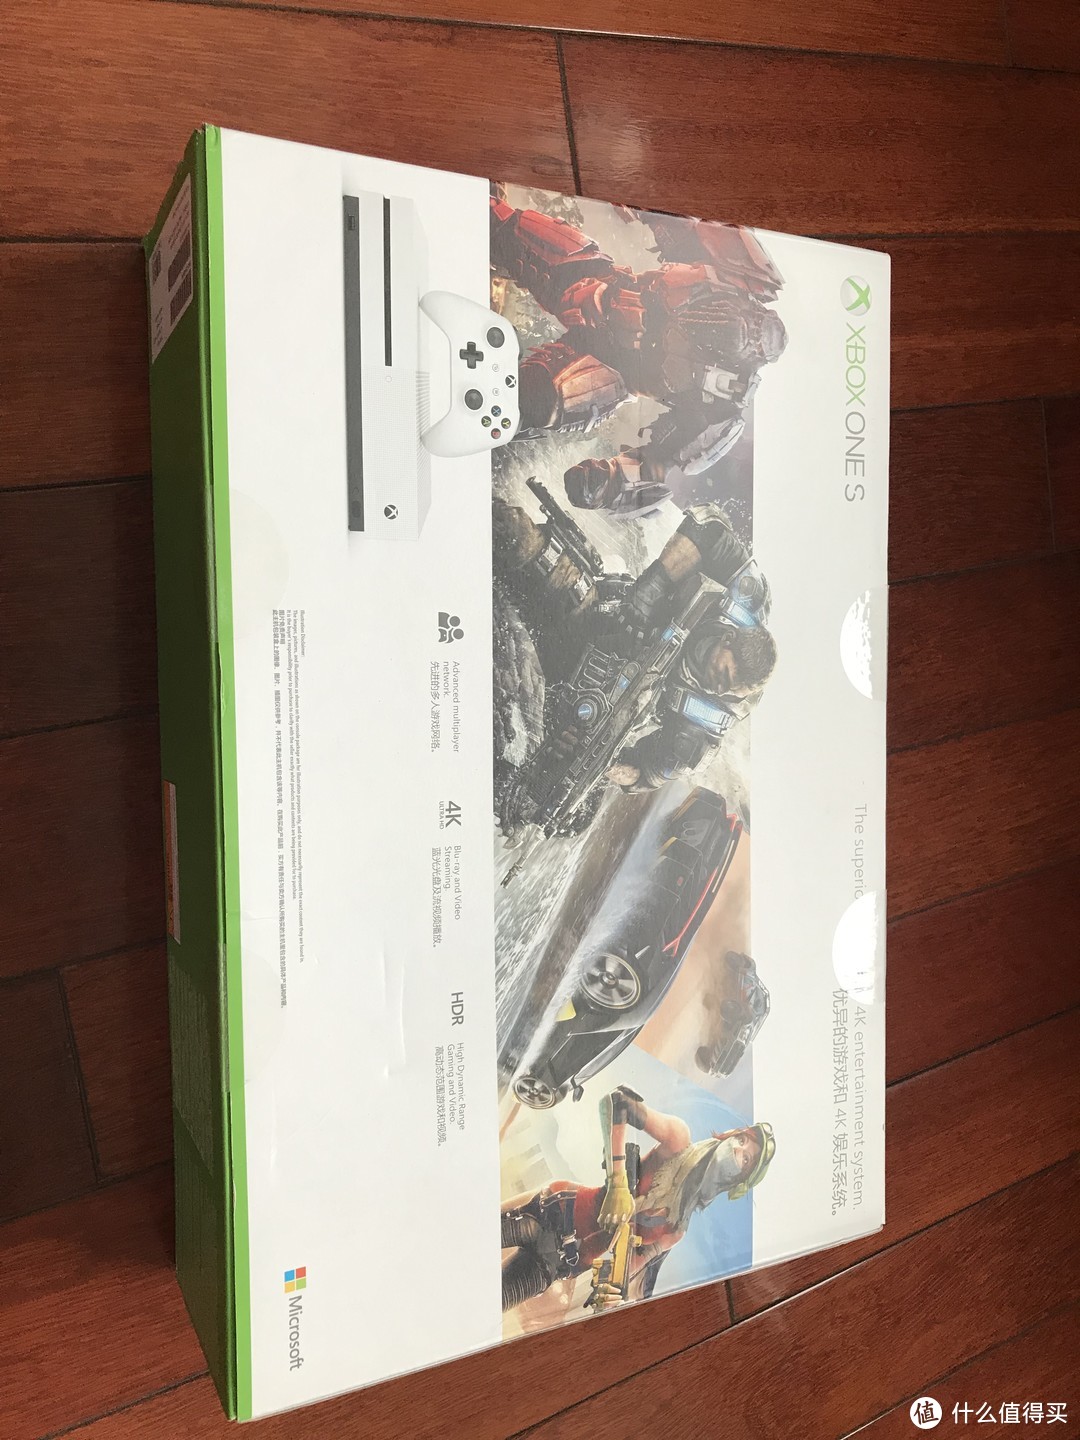 XBox One/PS4主机FPS游戏体验分享以及《使命召唤》系列游戏大赏